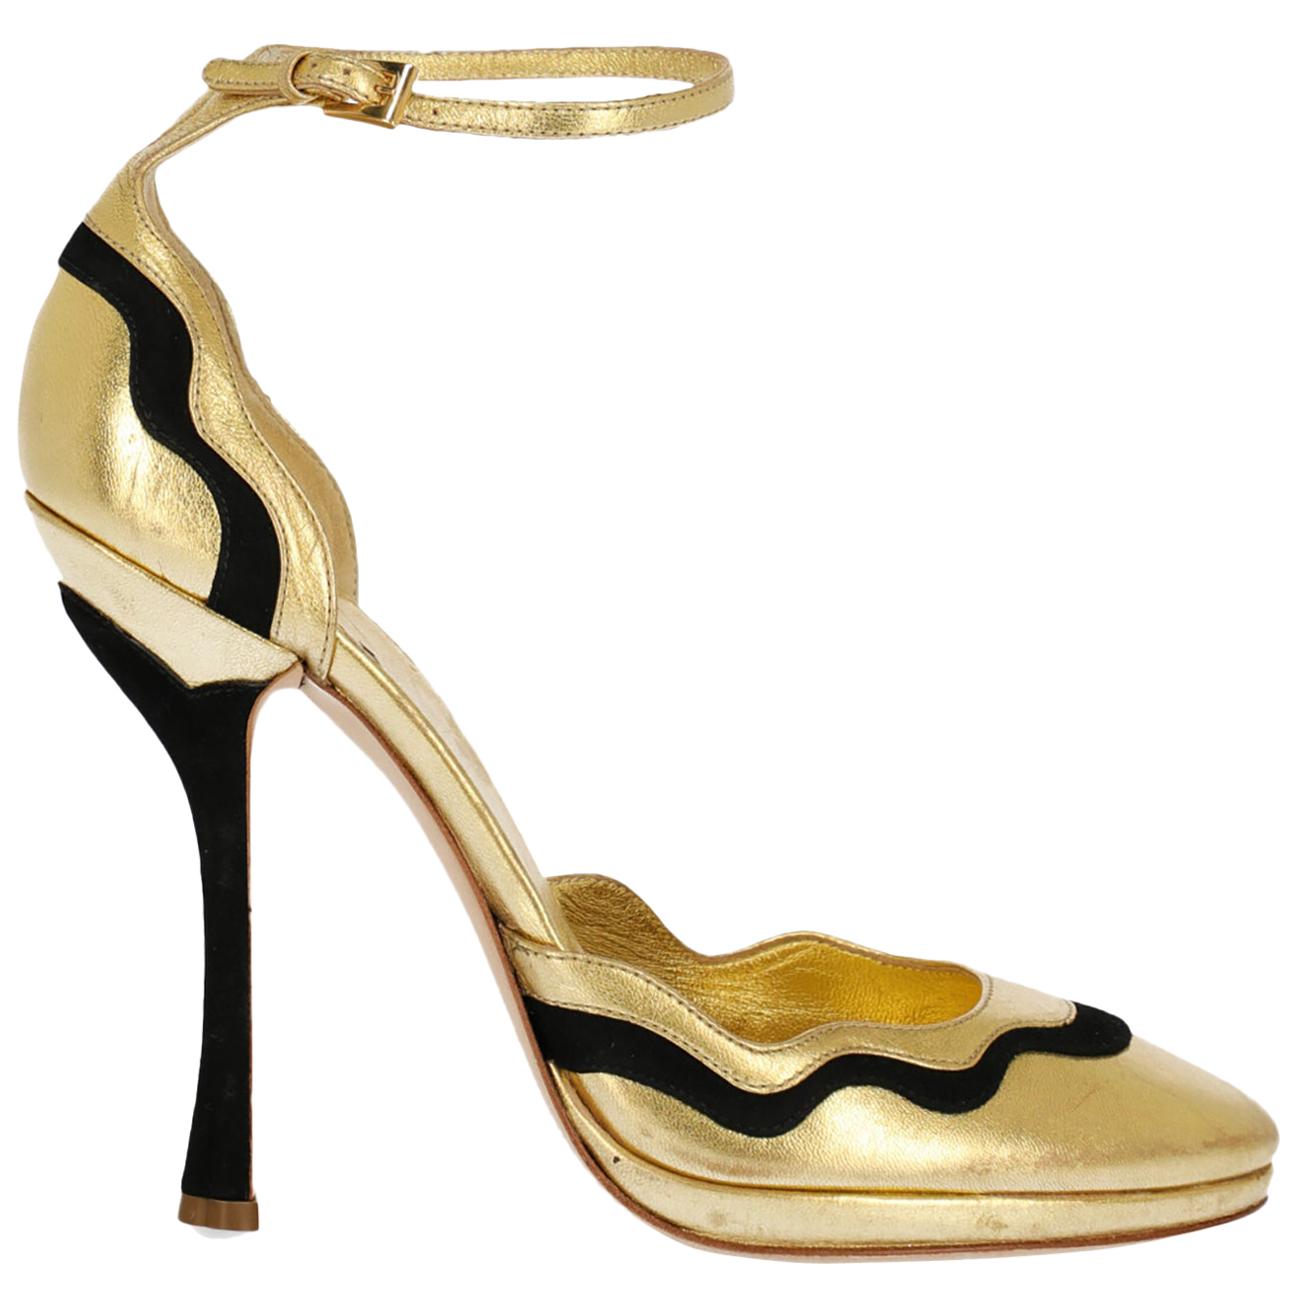 Prada Woman Shoes Pumps Black/Gold 